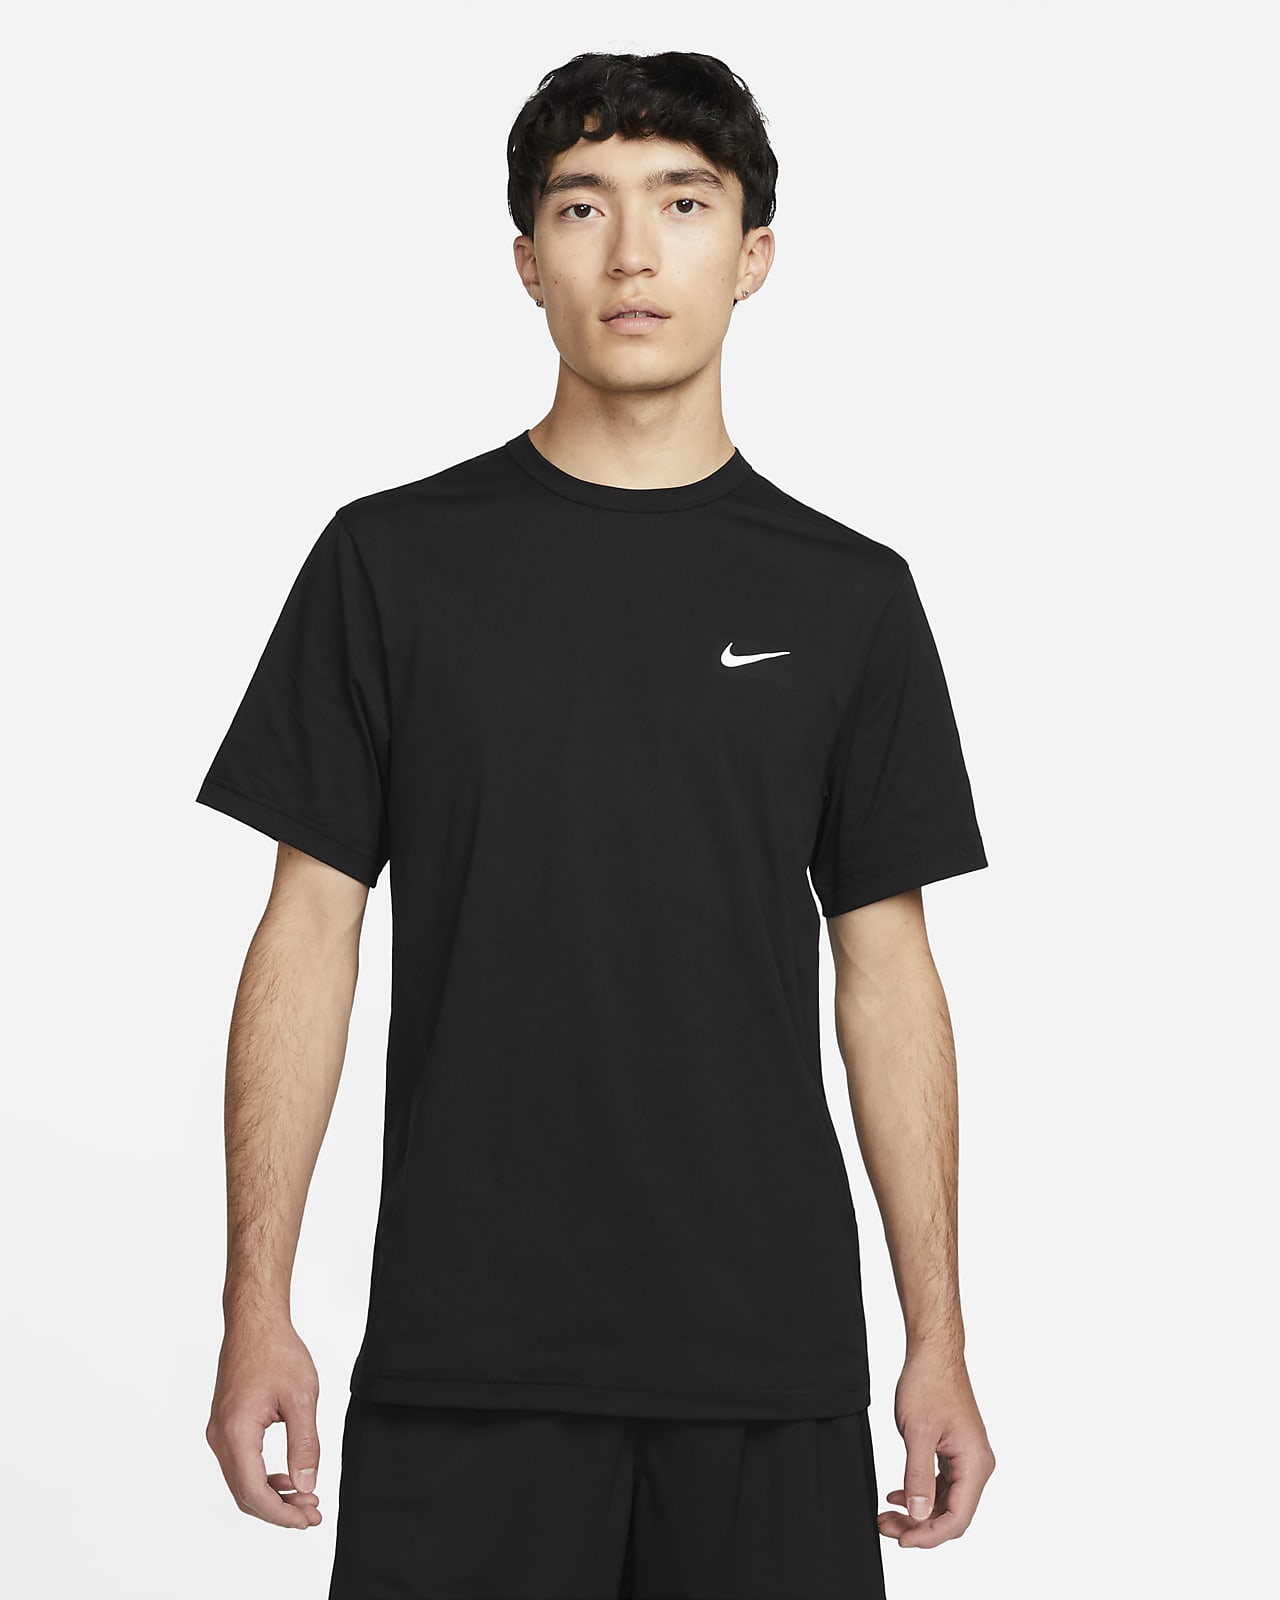 Nike Dri-FIT UV Hyverse Men's Short-Sleeve Fitness Top